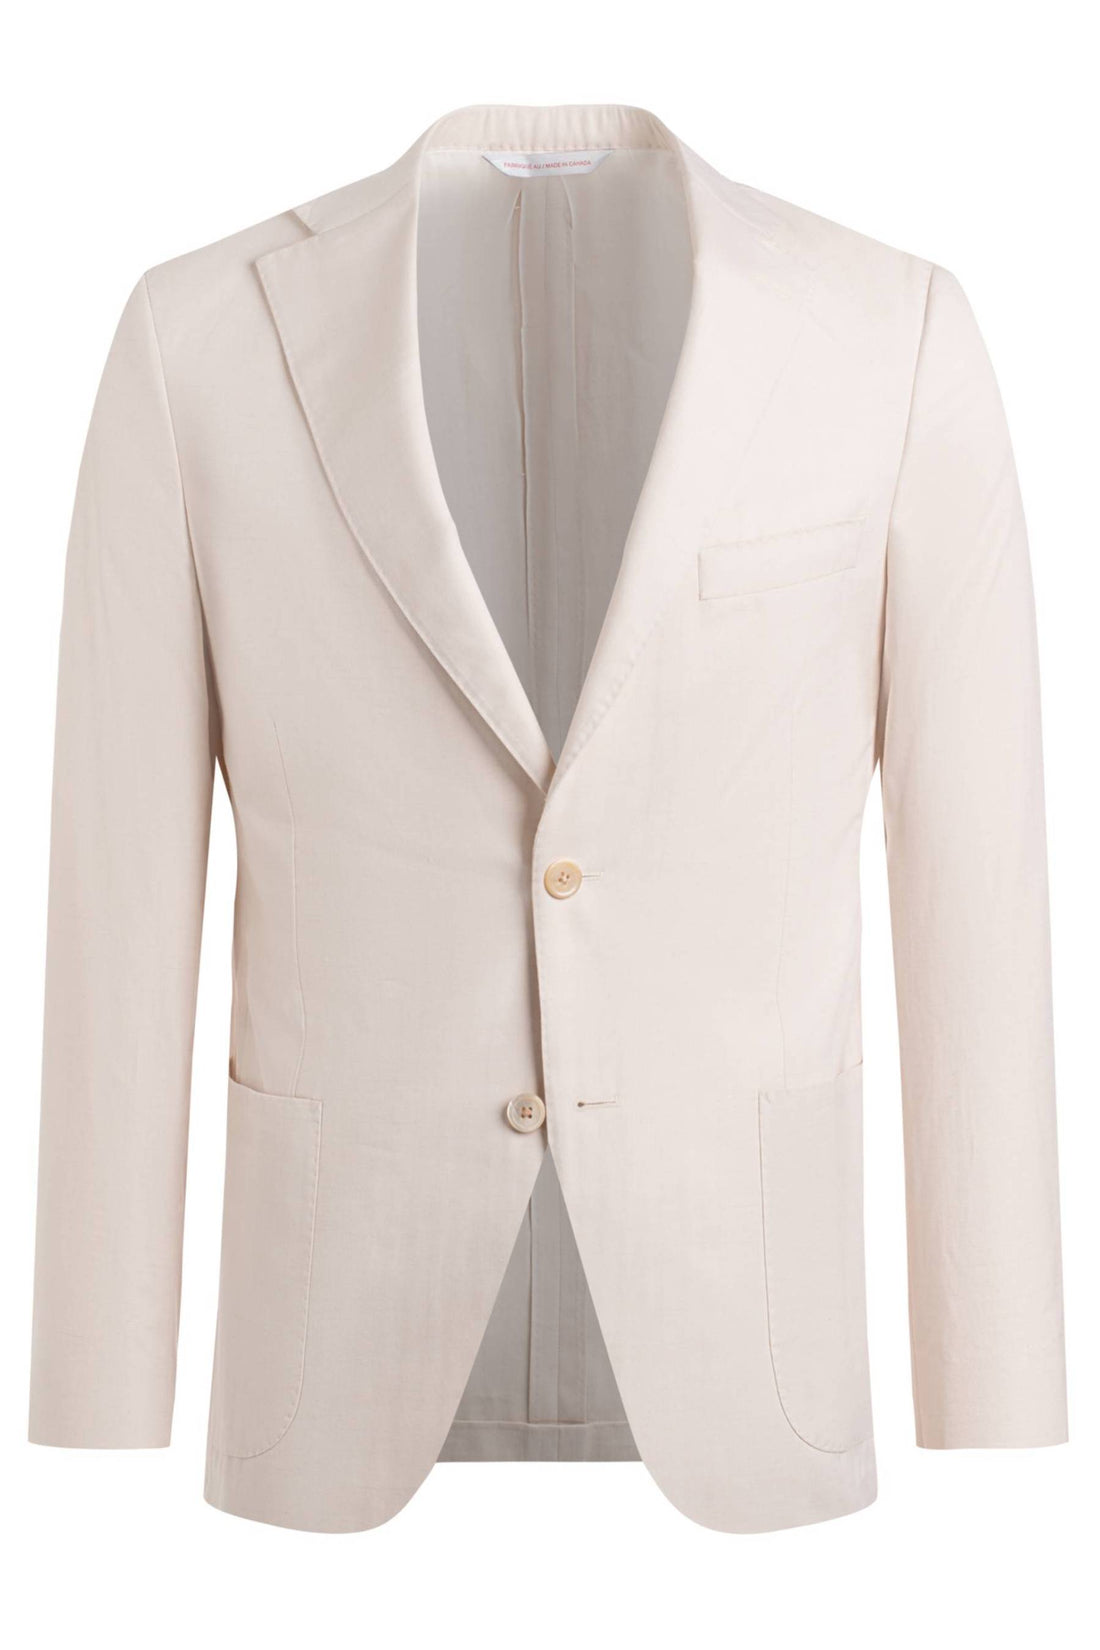 Samuelsohn Cream Cotton Silk Herringbone Suit Jacket Front 